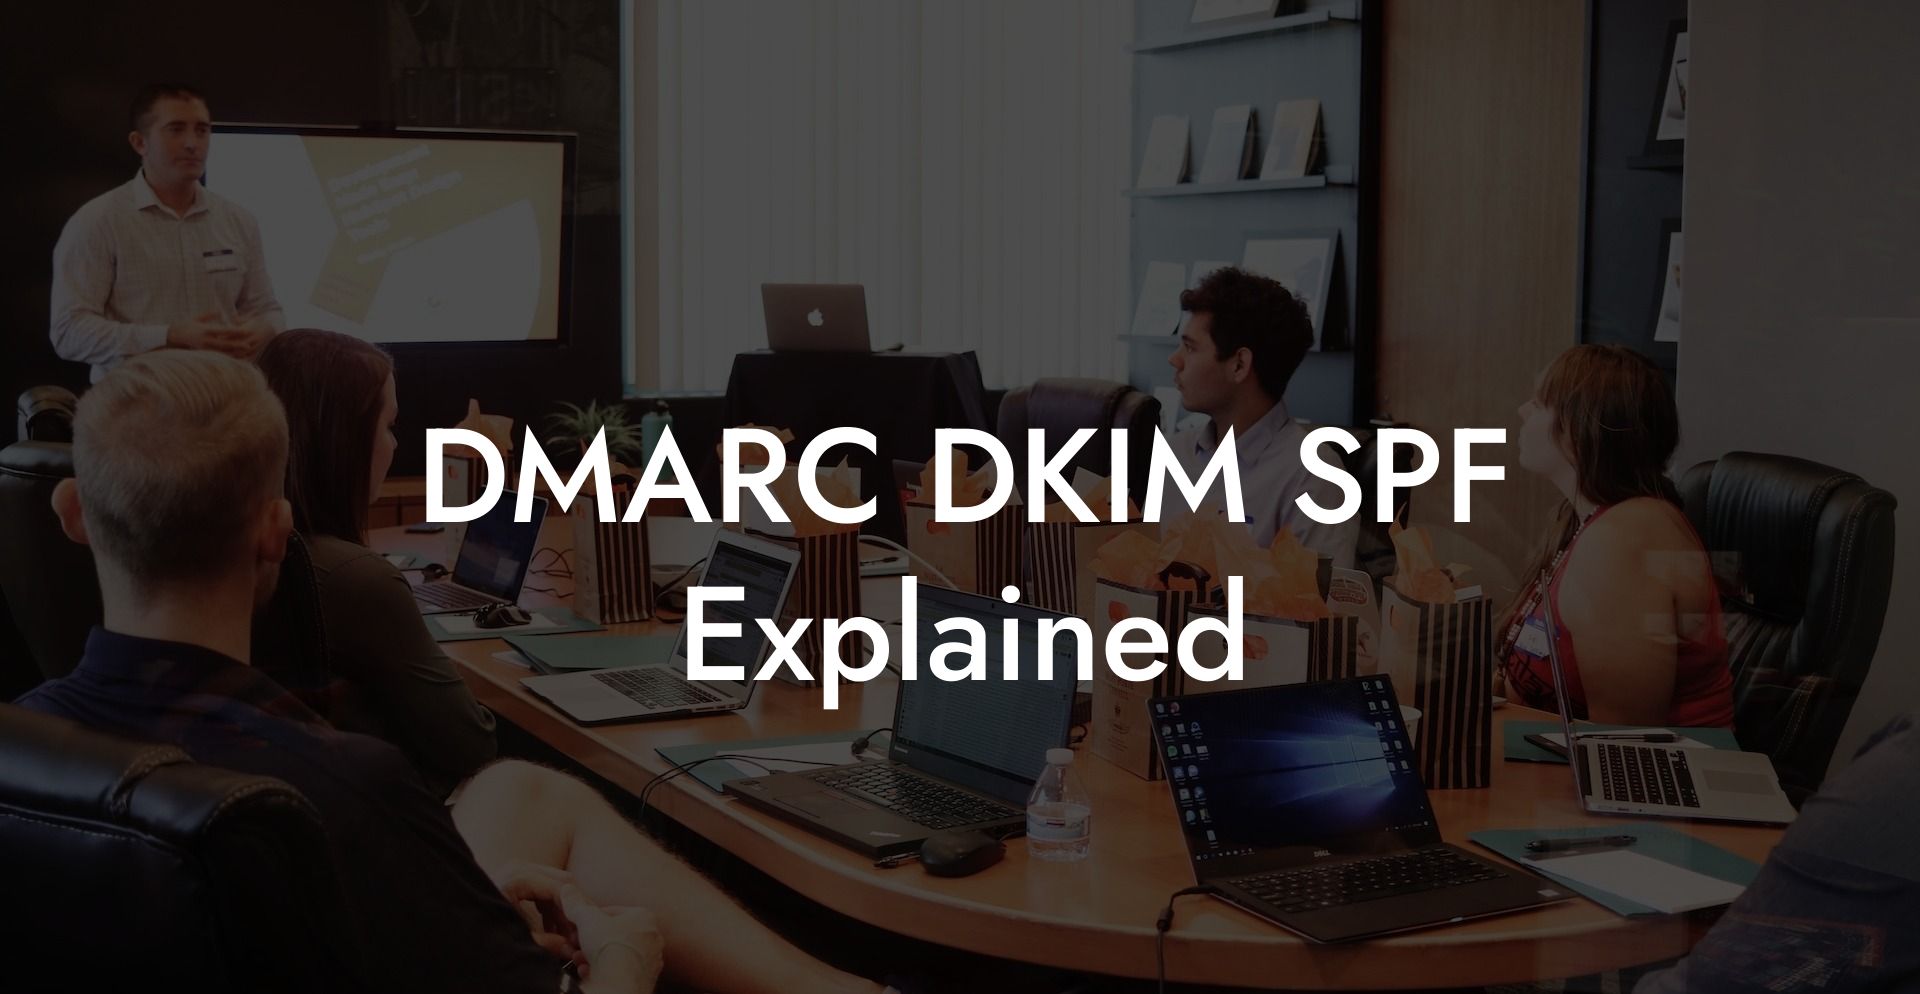 DMARC DKIM SPF Explained